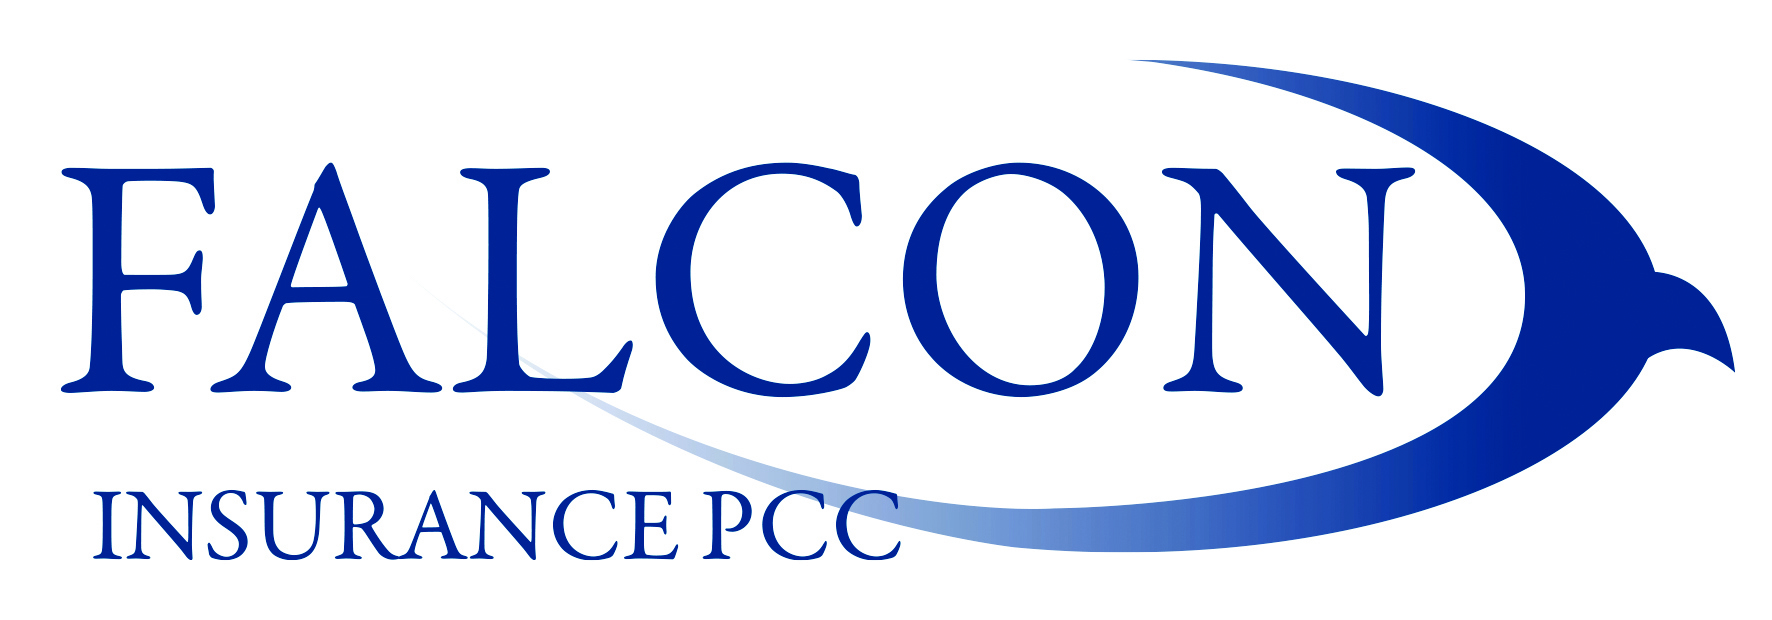 Falcon Insurance PCC